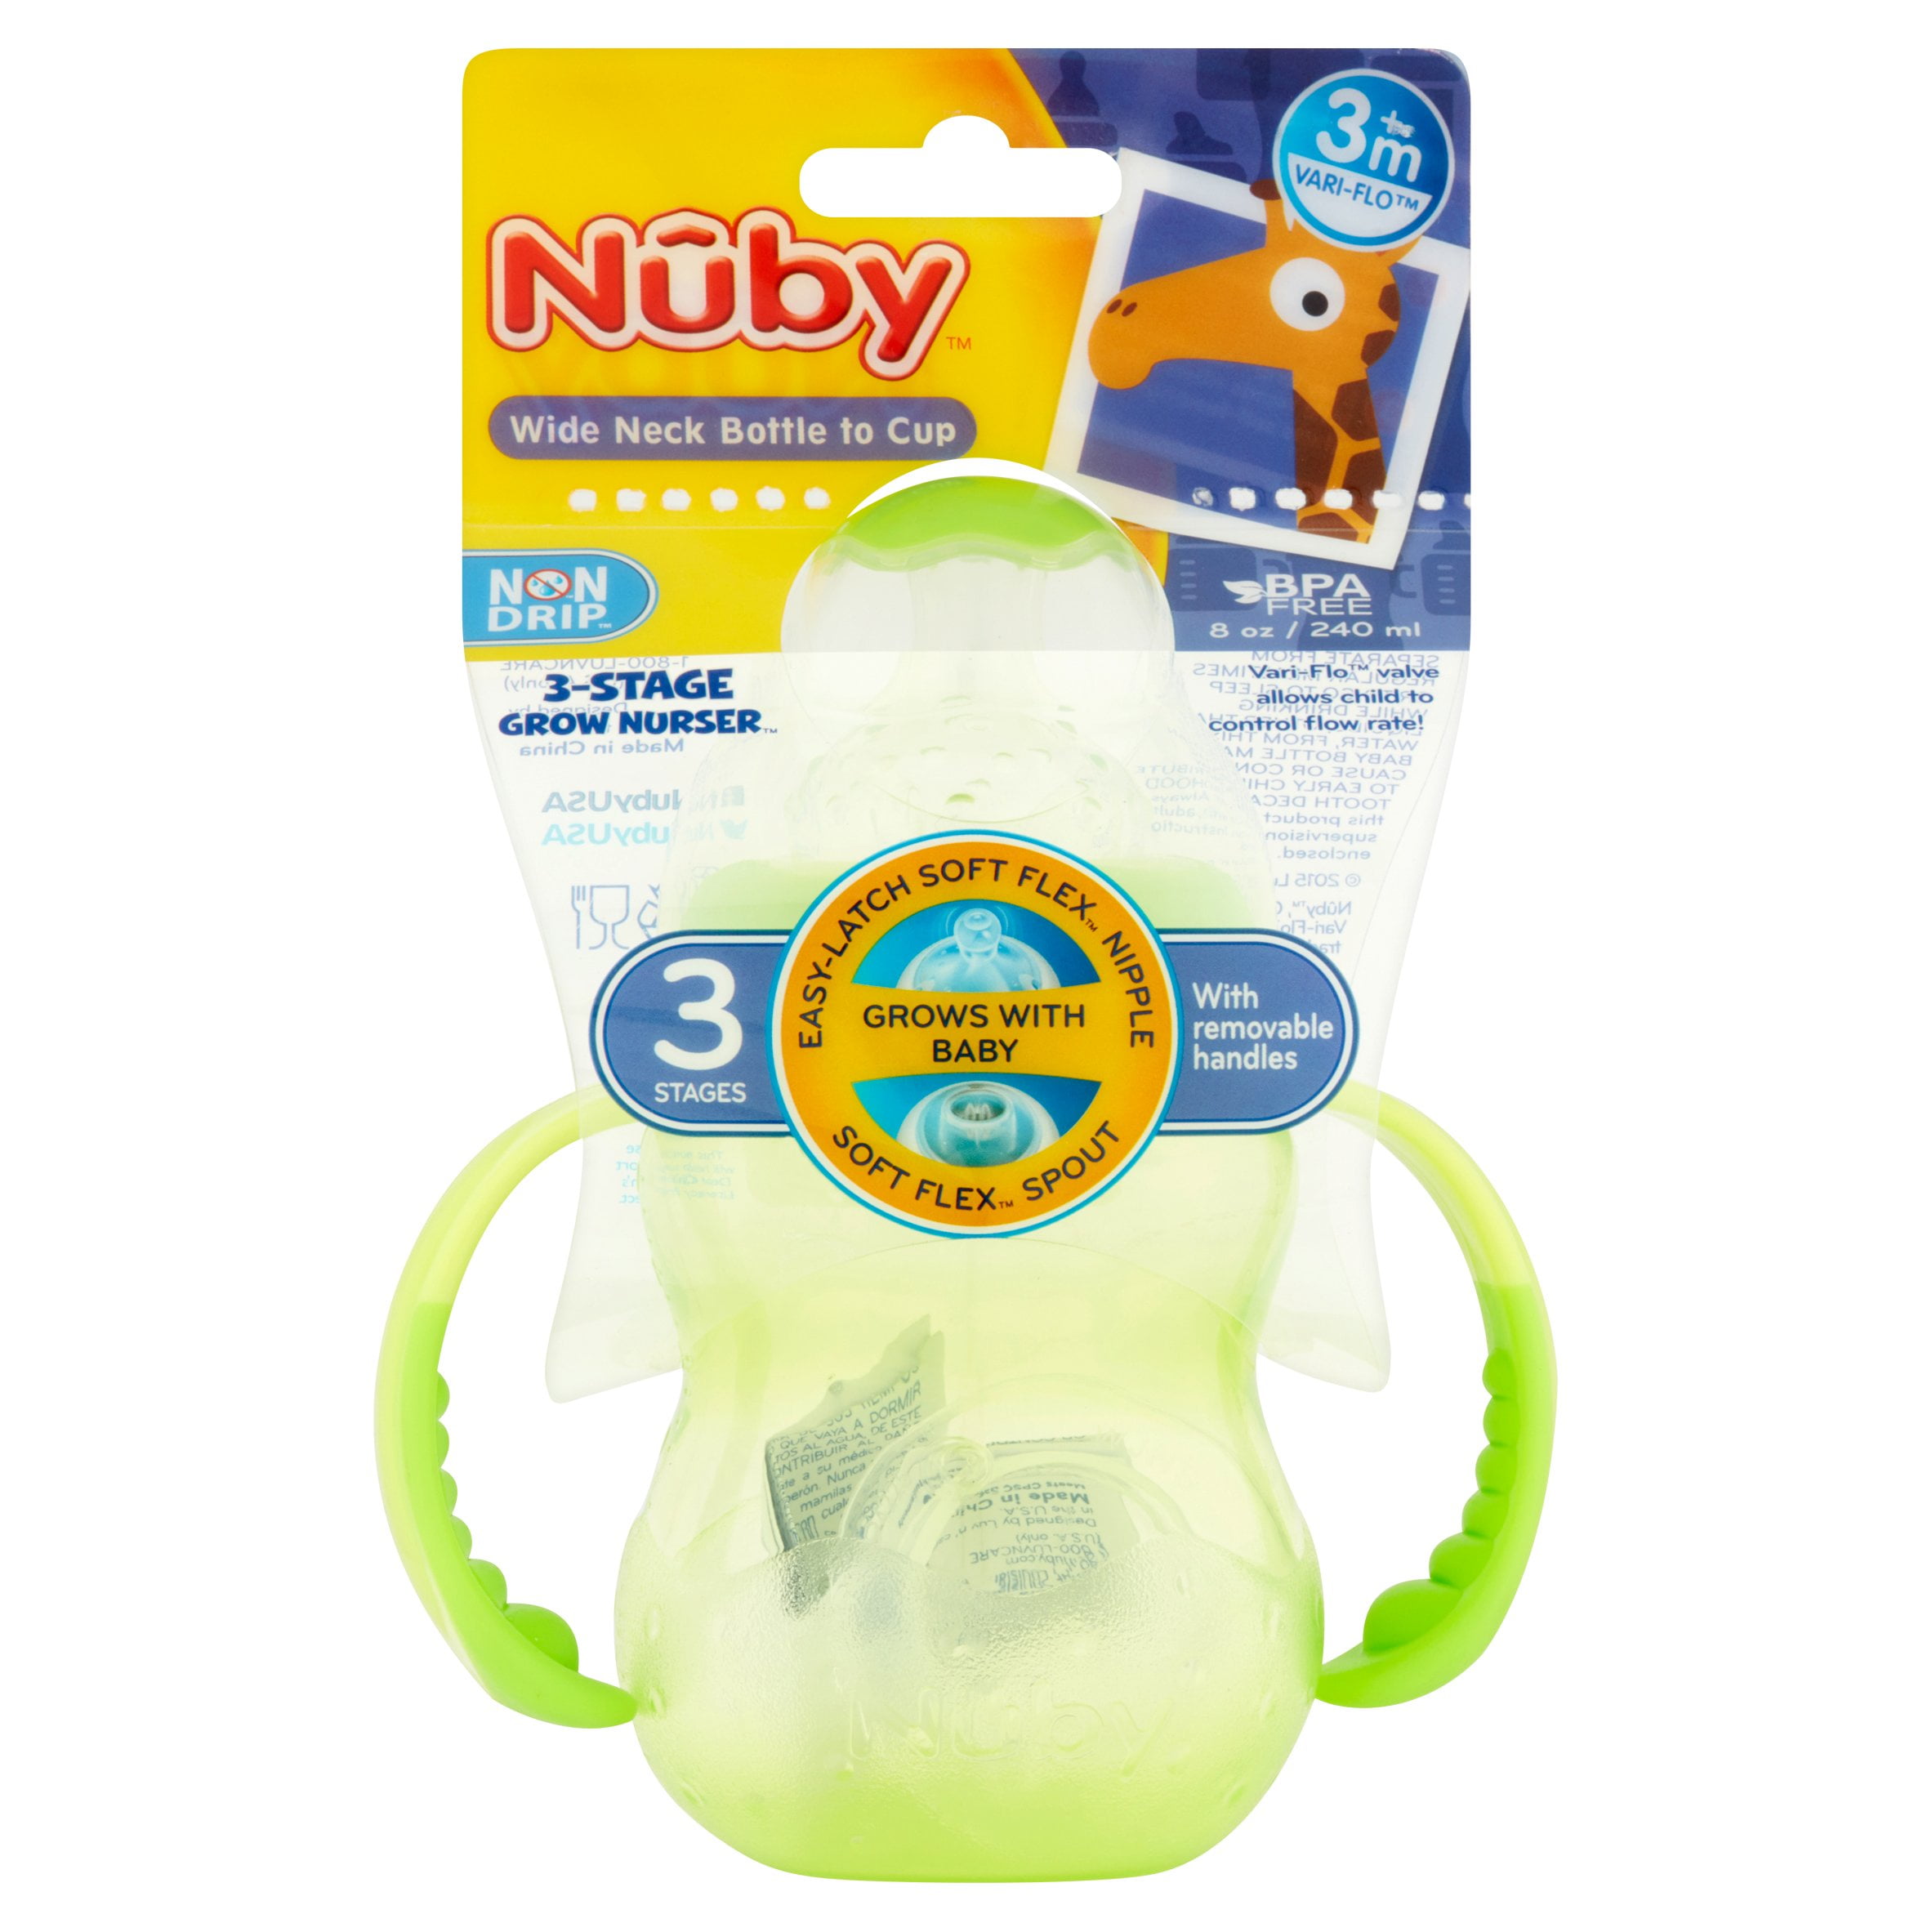 nuby 3 stage grow nurser